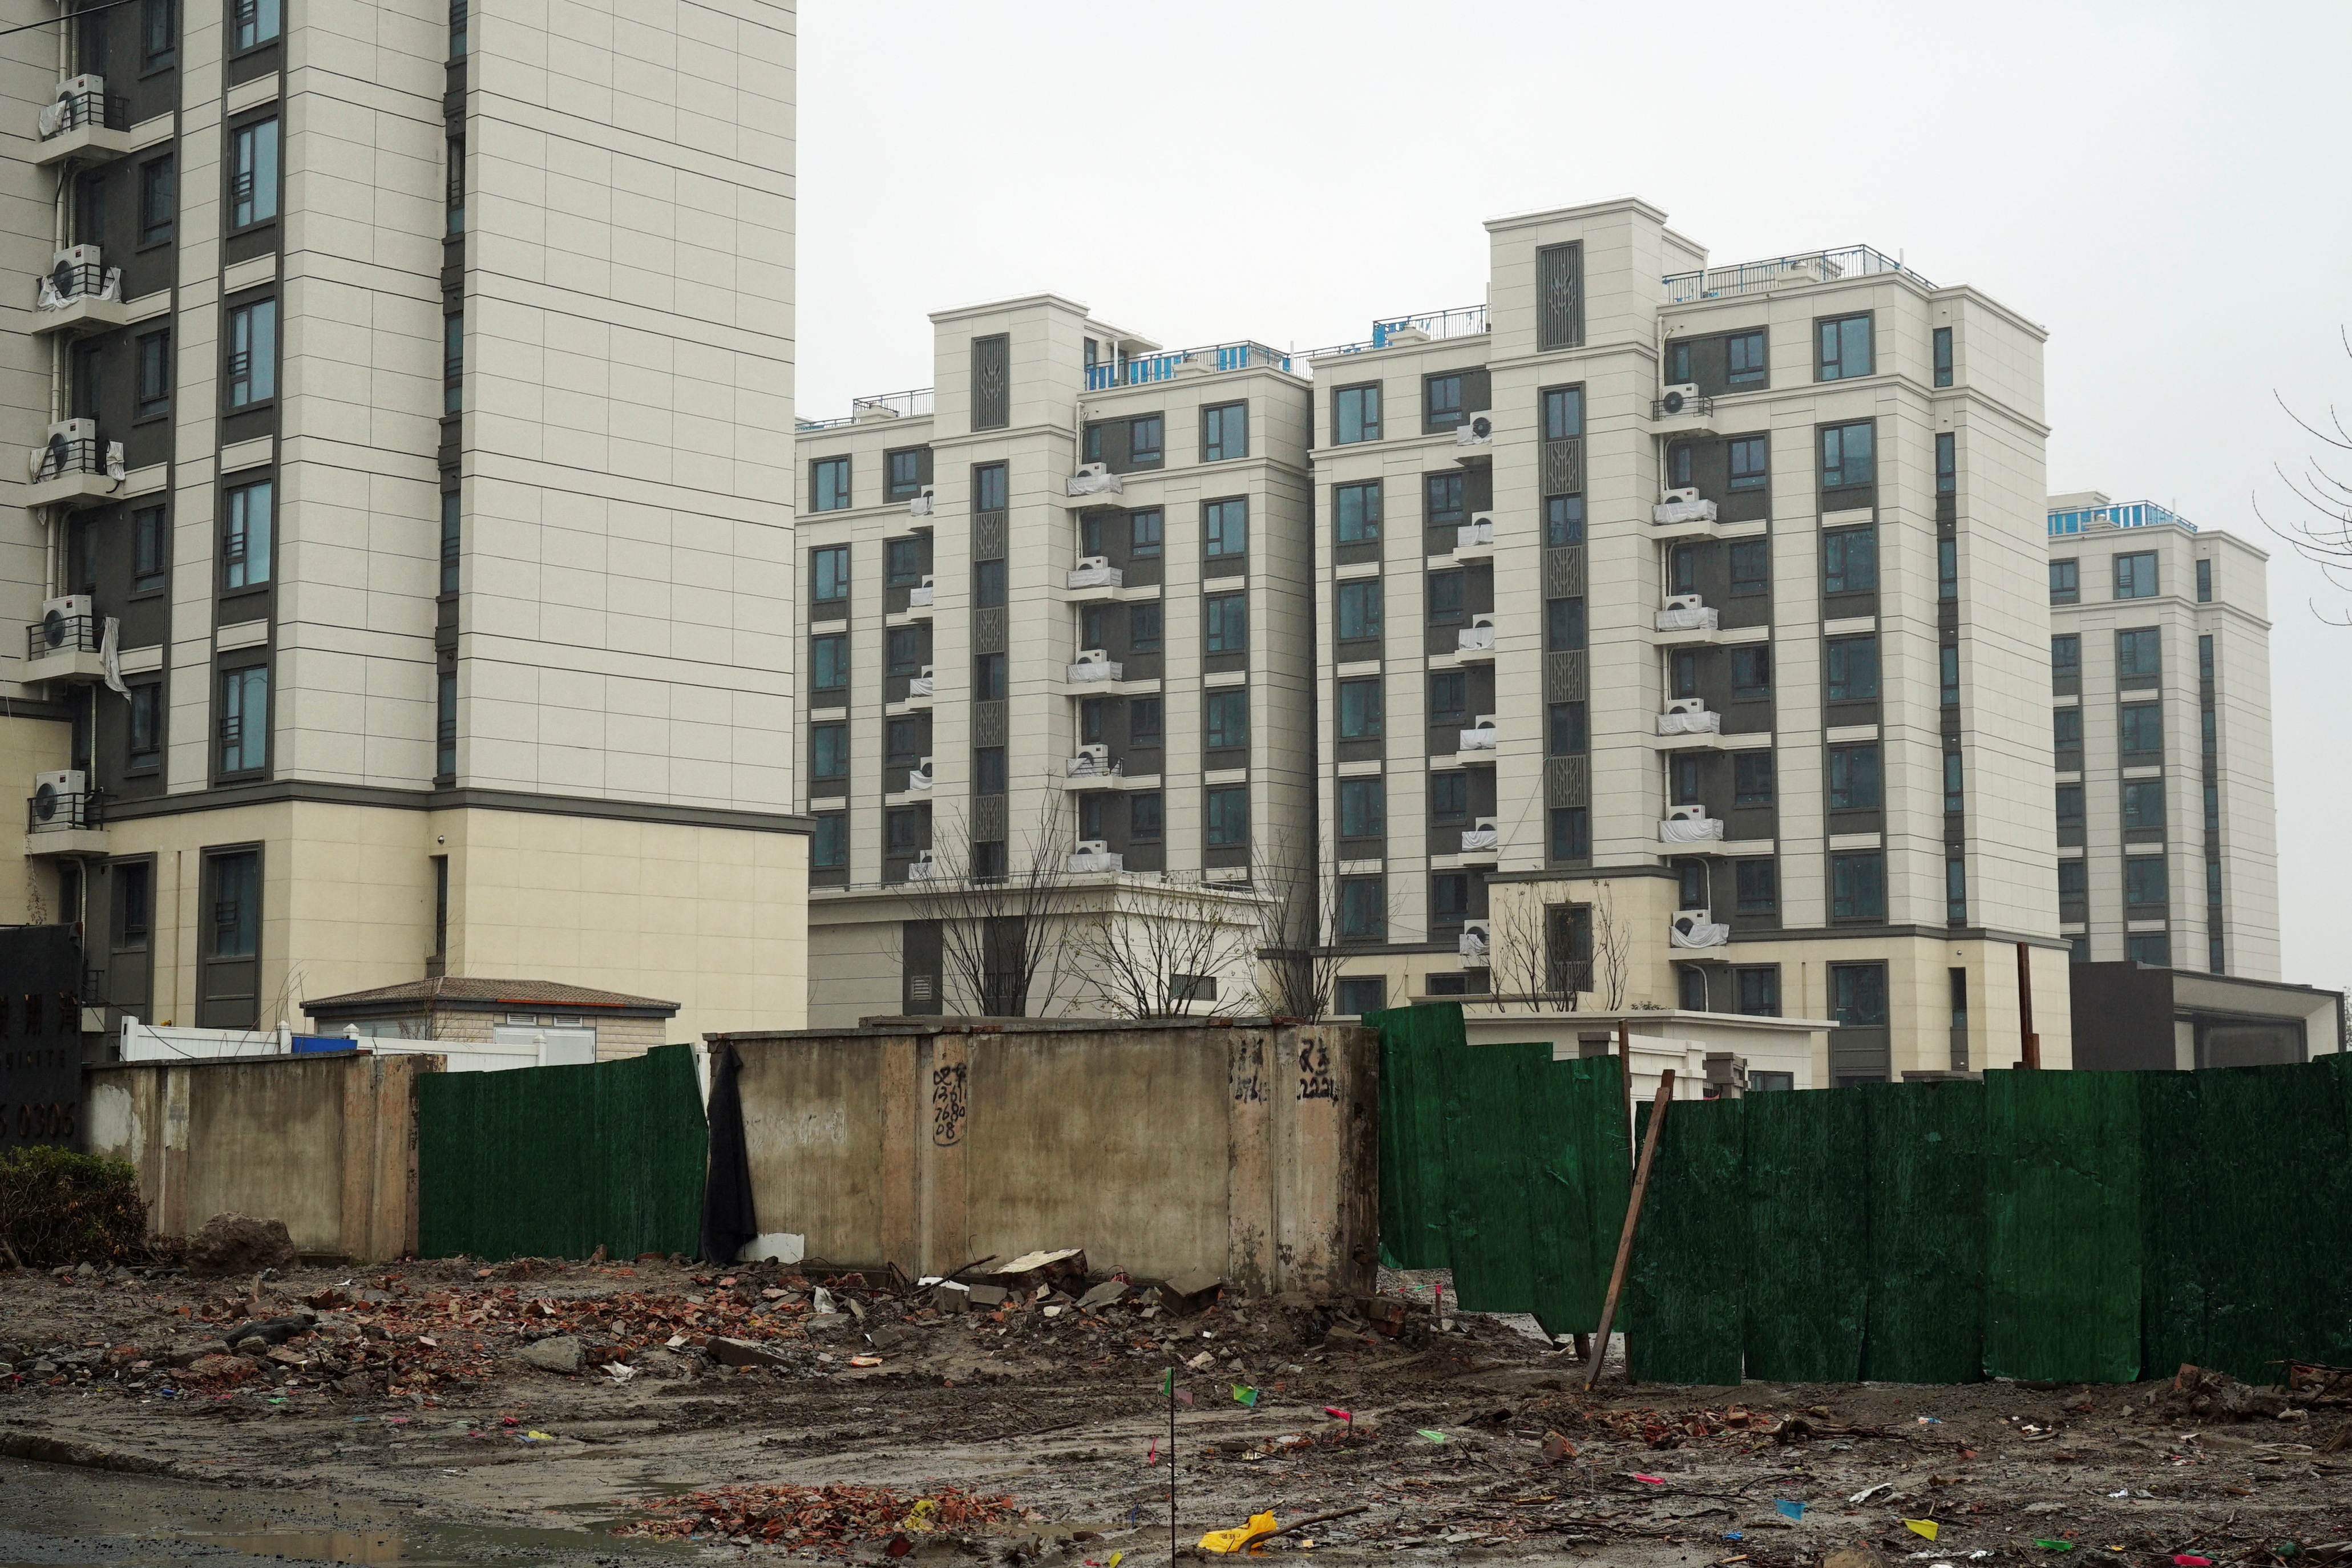 Under-construction residential development by Country Garden in Shanghai